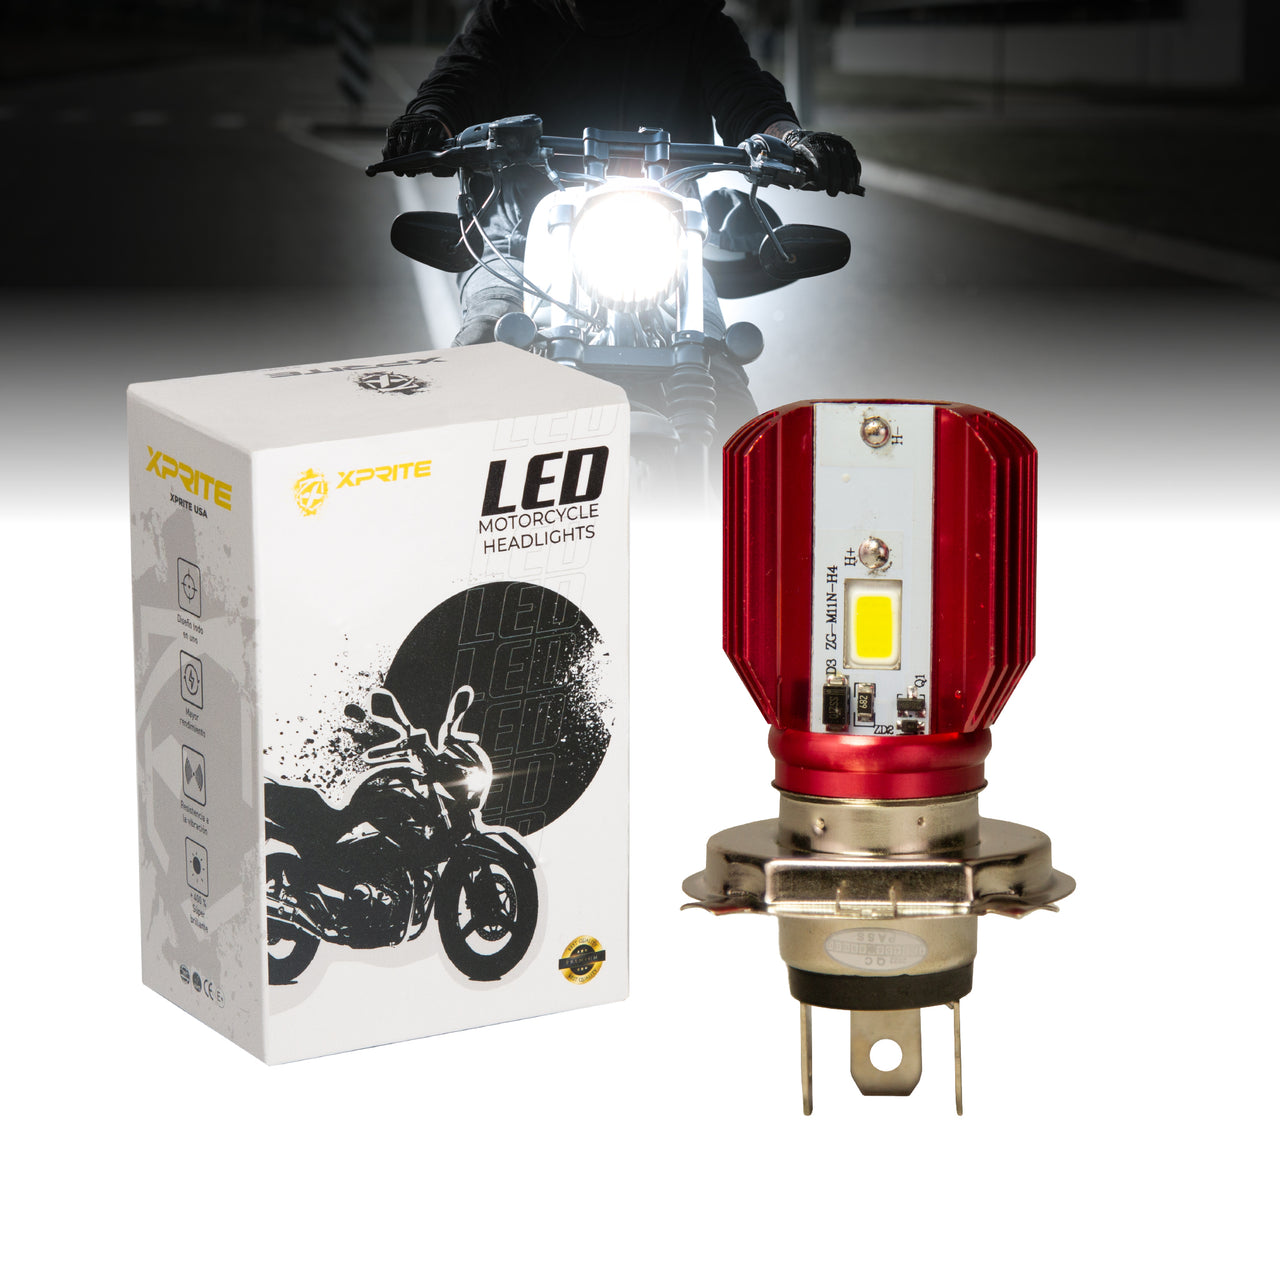 Bombillas LED Para Faro de Moto / LED Headlight Bulbs for Motorcycle